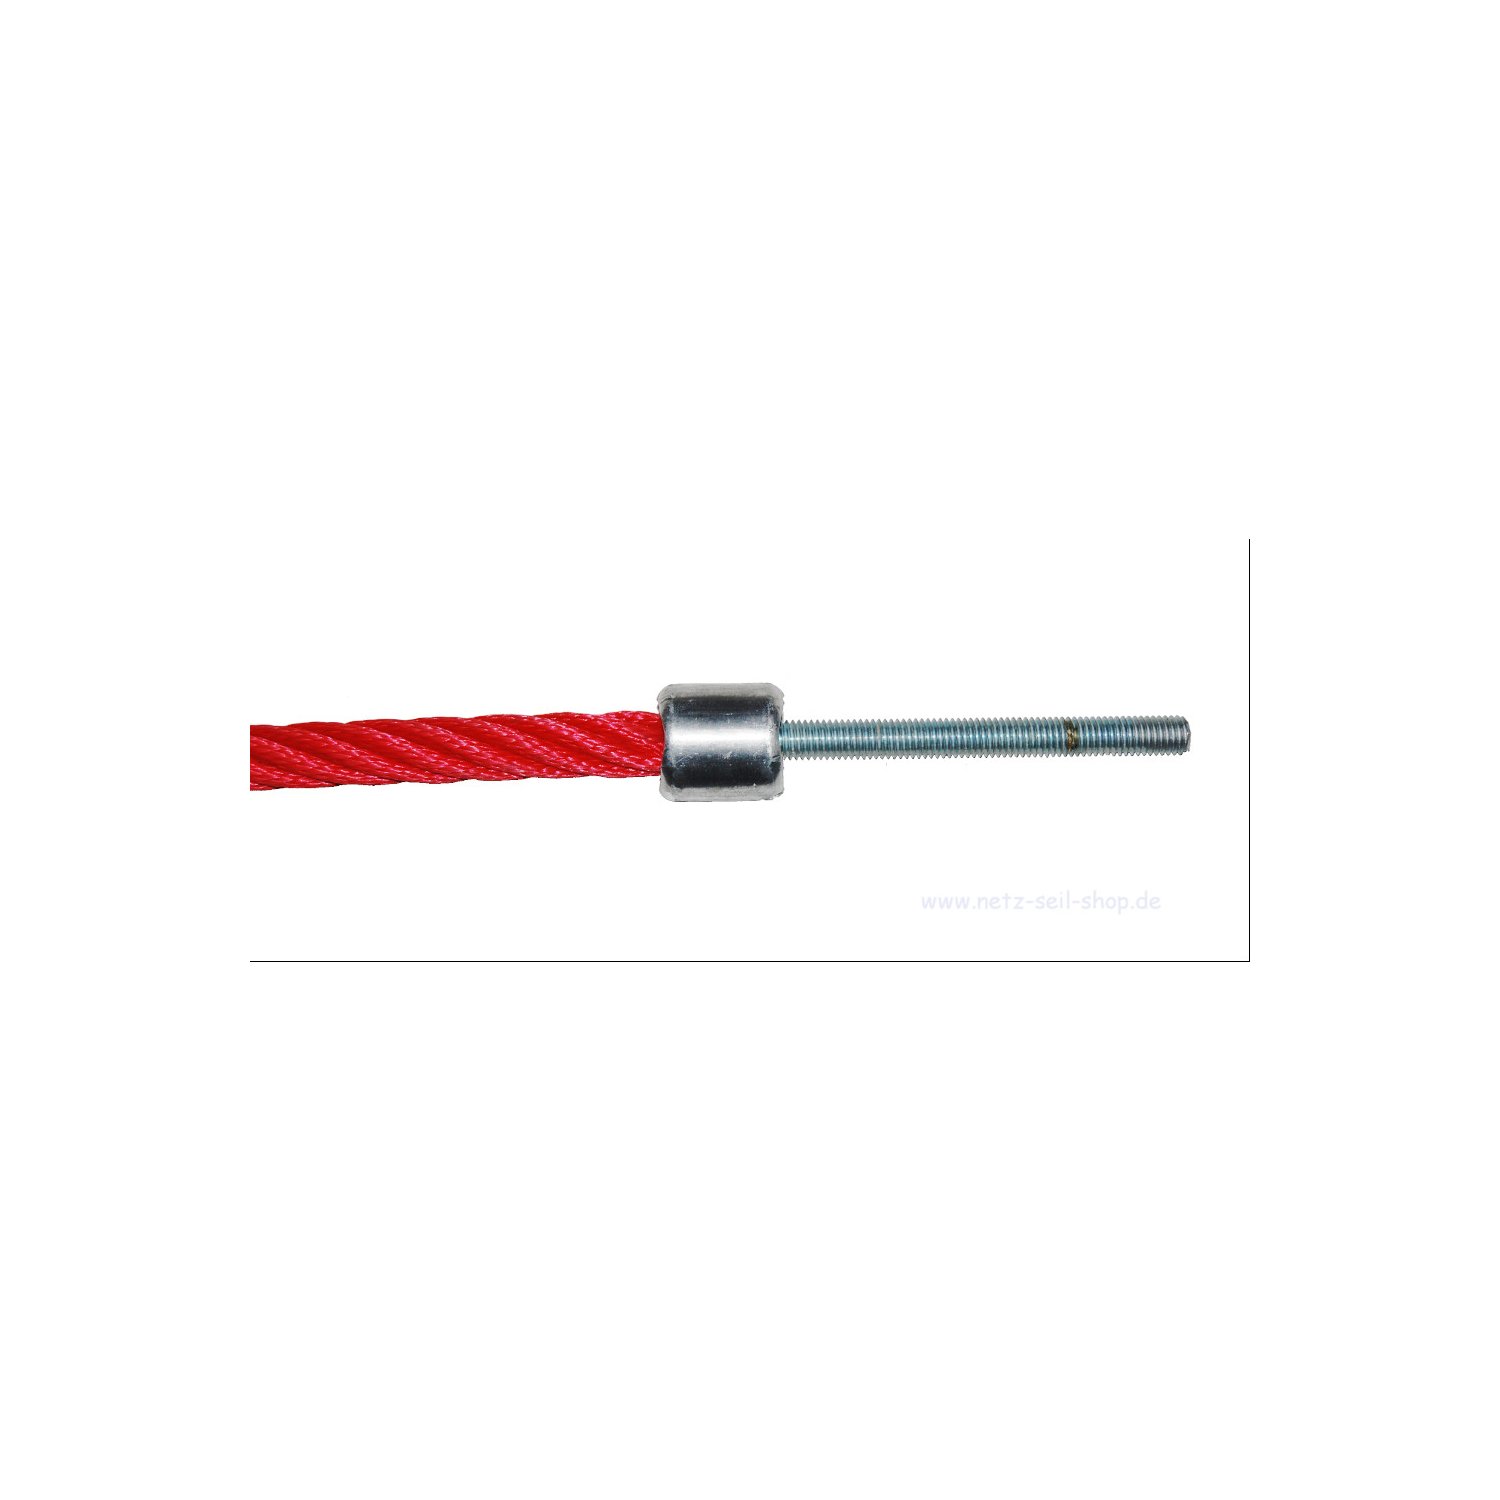 Threaded bolt M12x160 mm galvanized